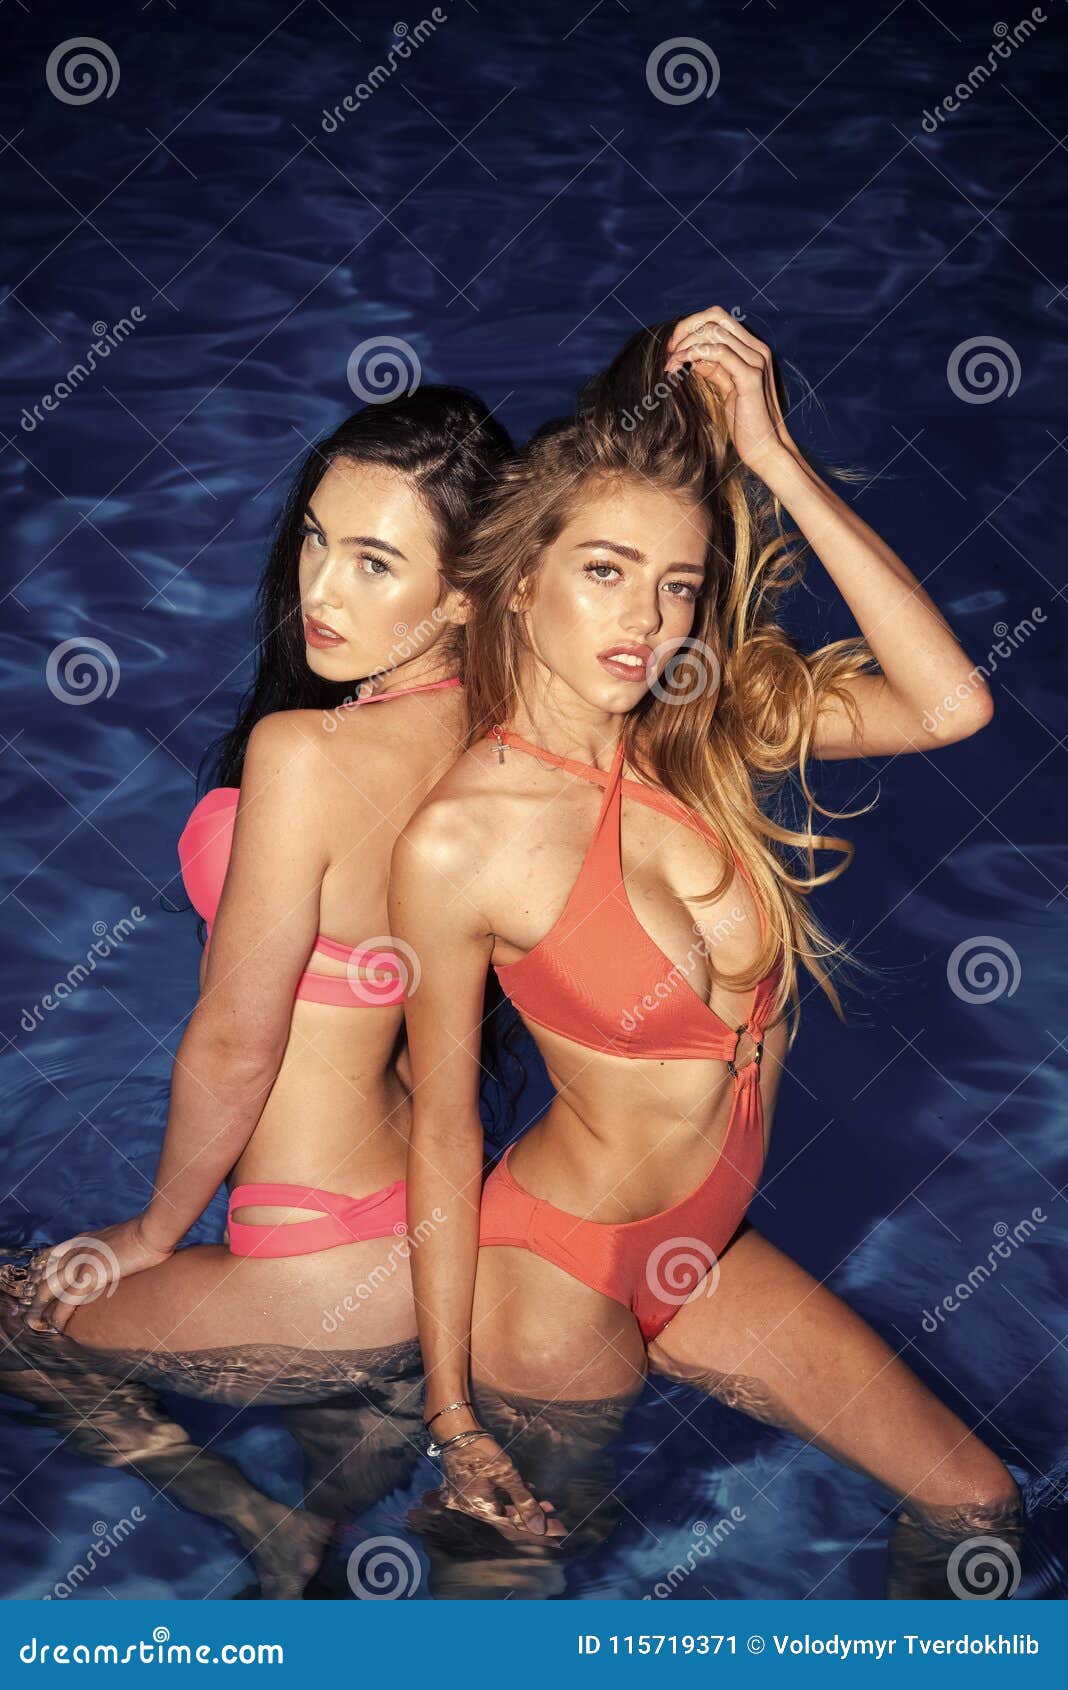 Hot Lesbians In Pool